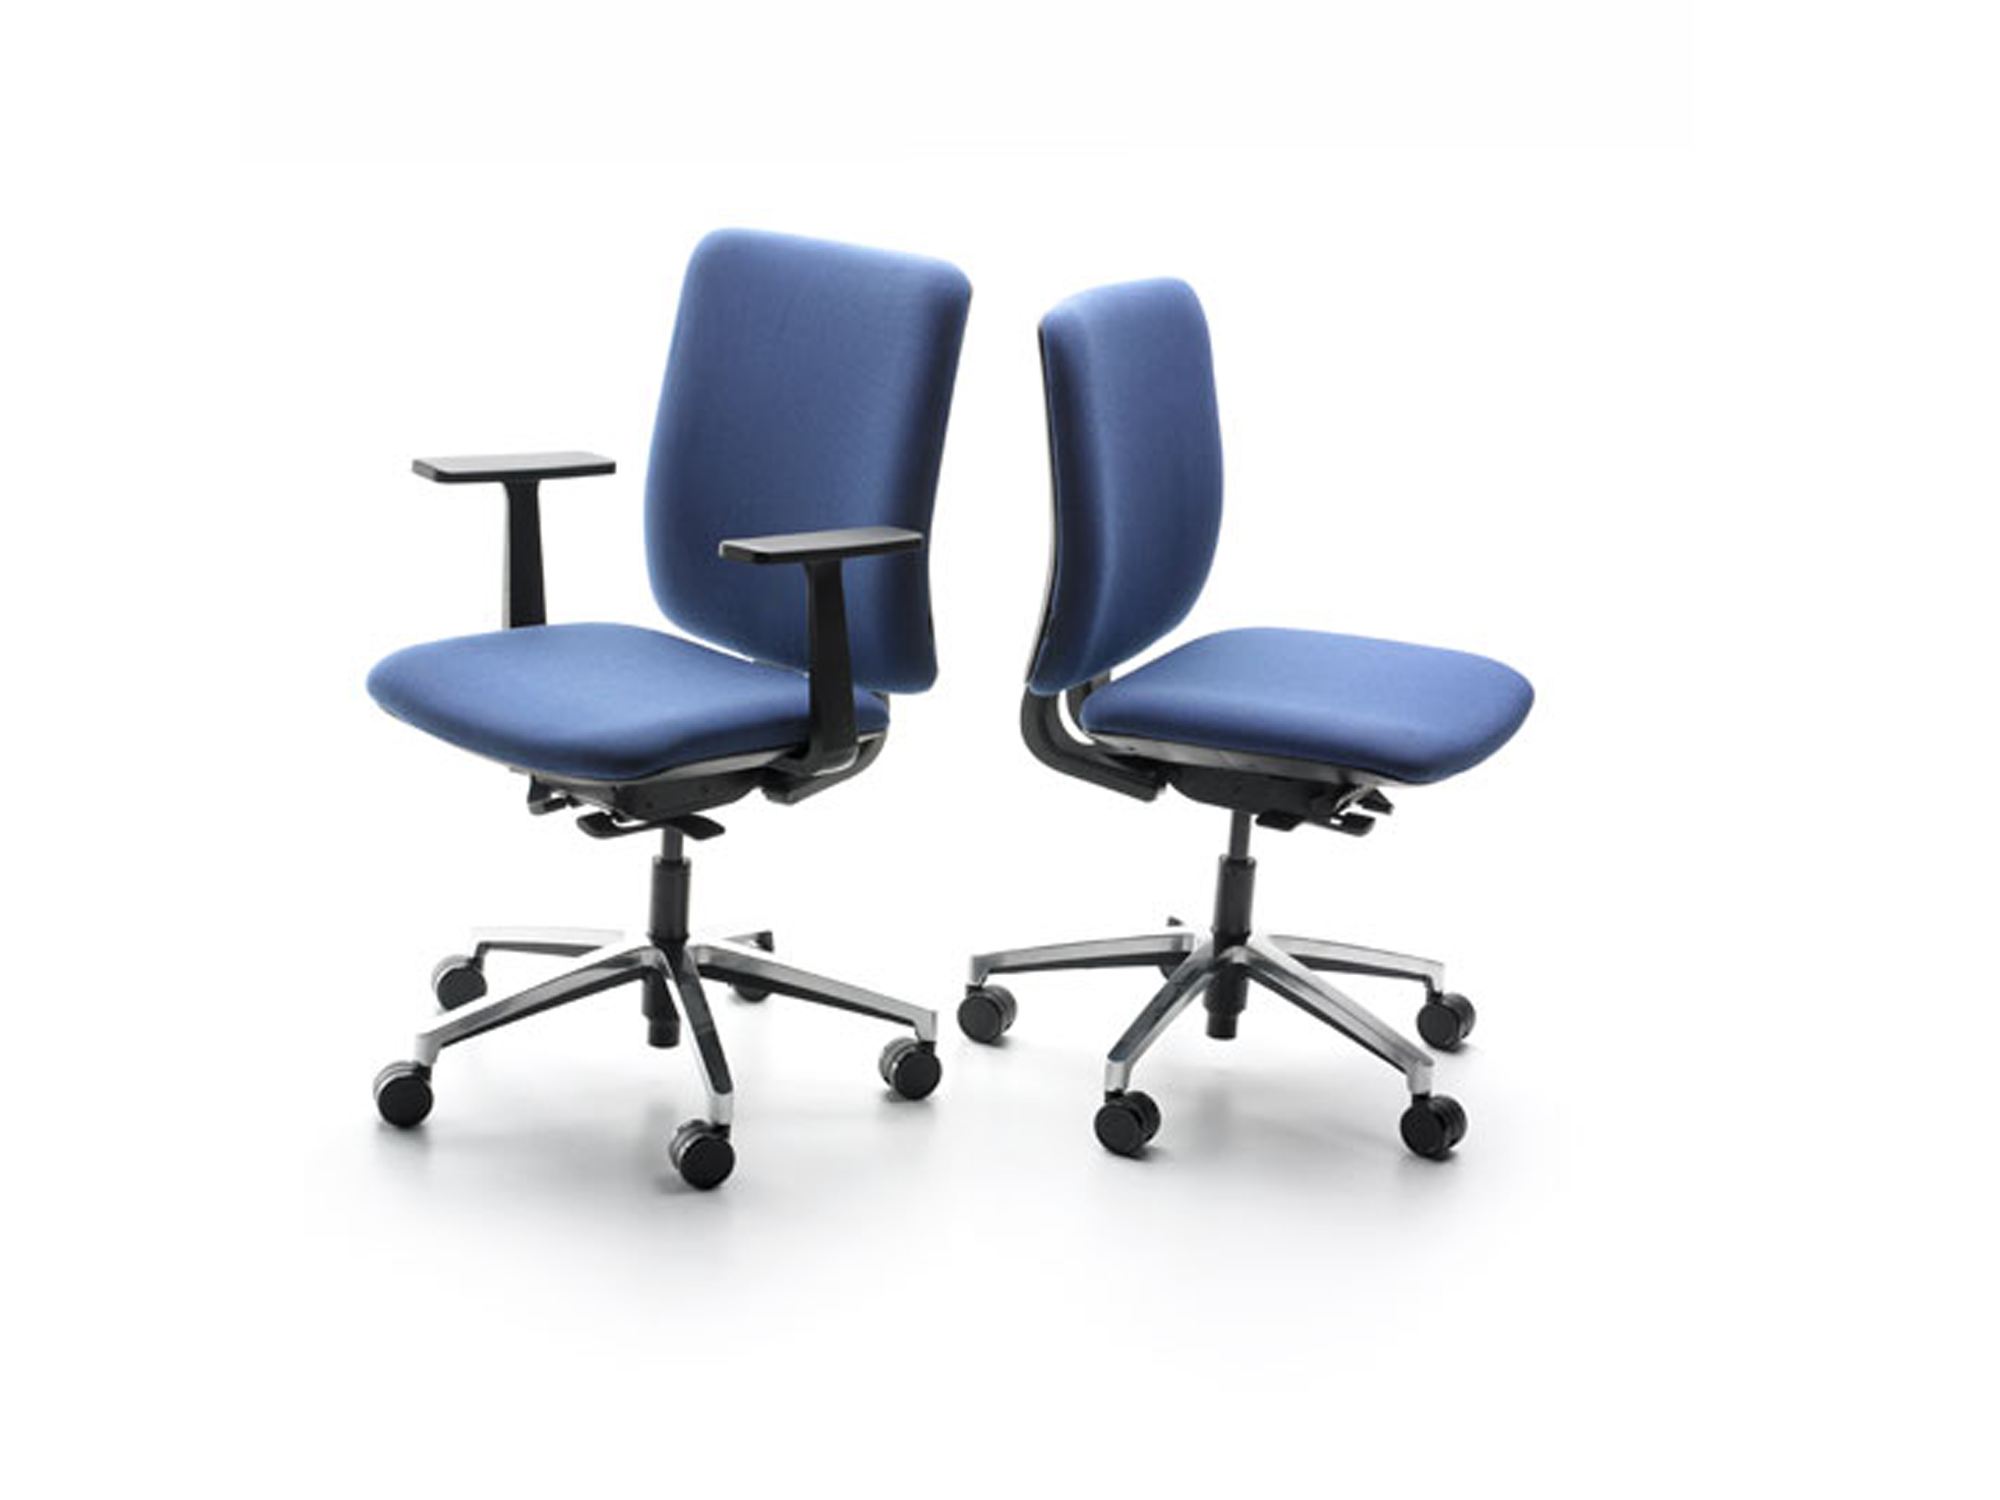 Chair-design-9.jpg